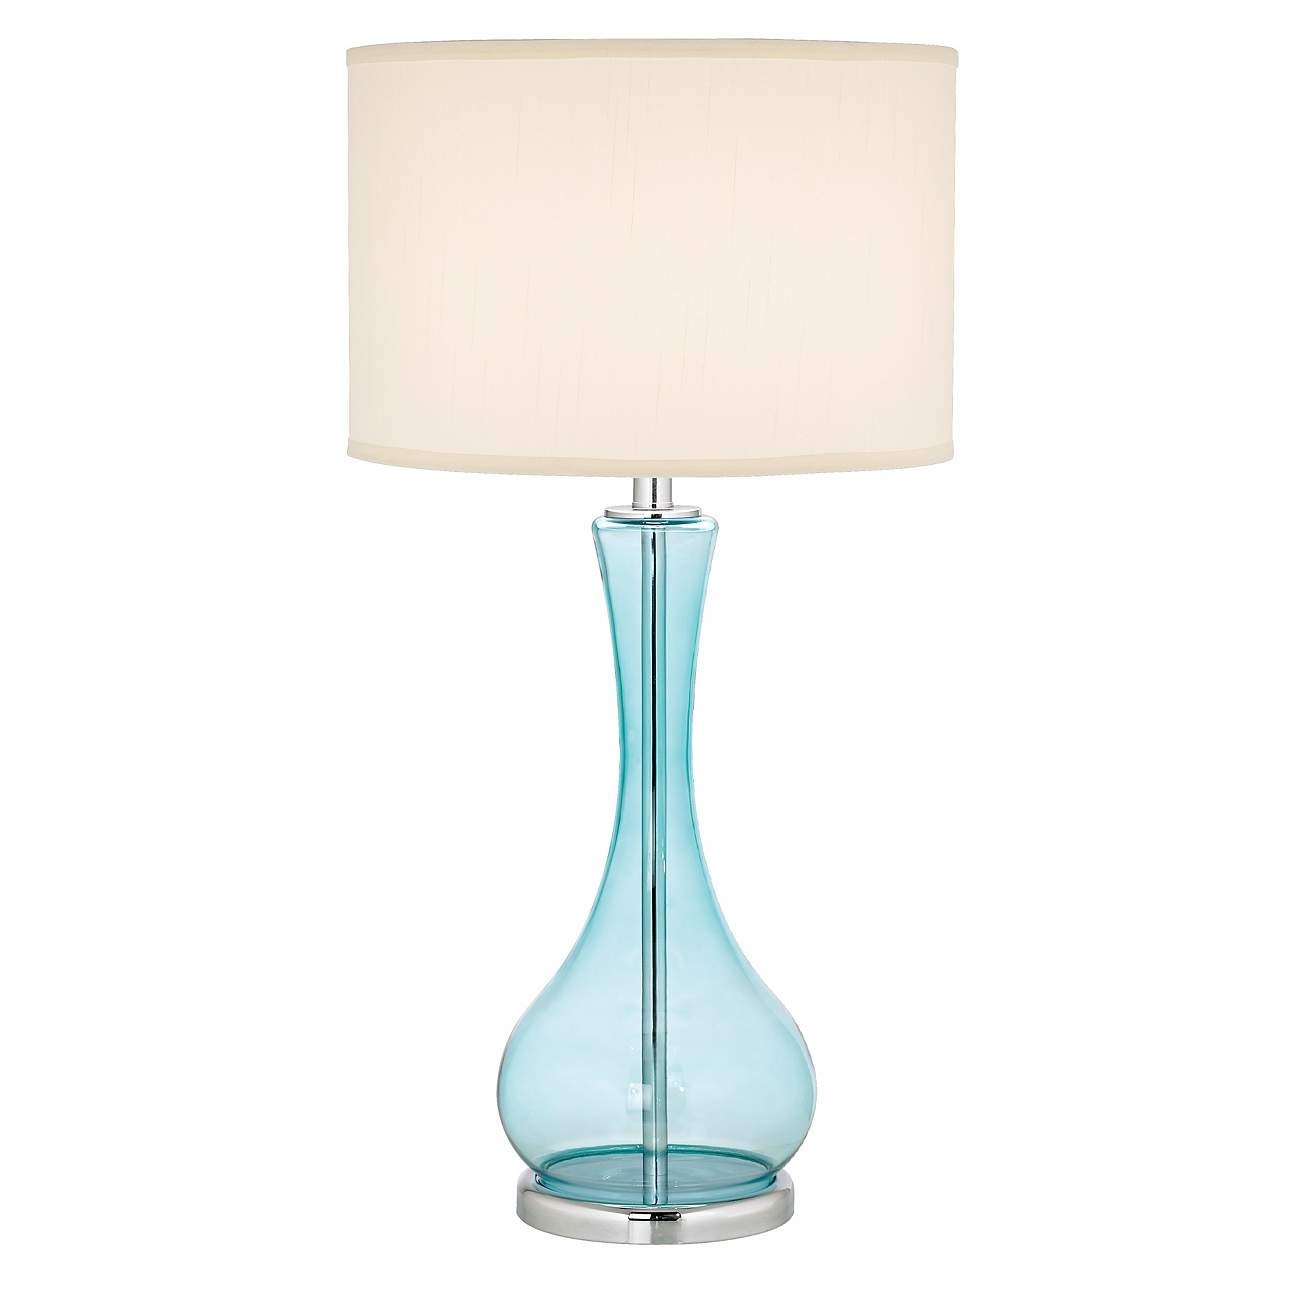 Blue martini glass table lamp h3008 lamps plus